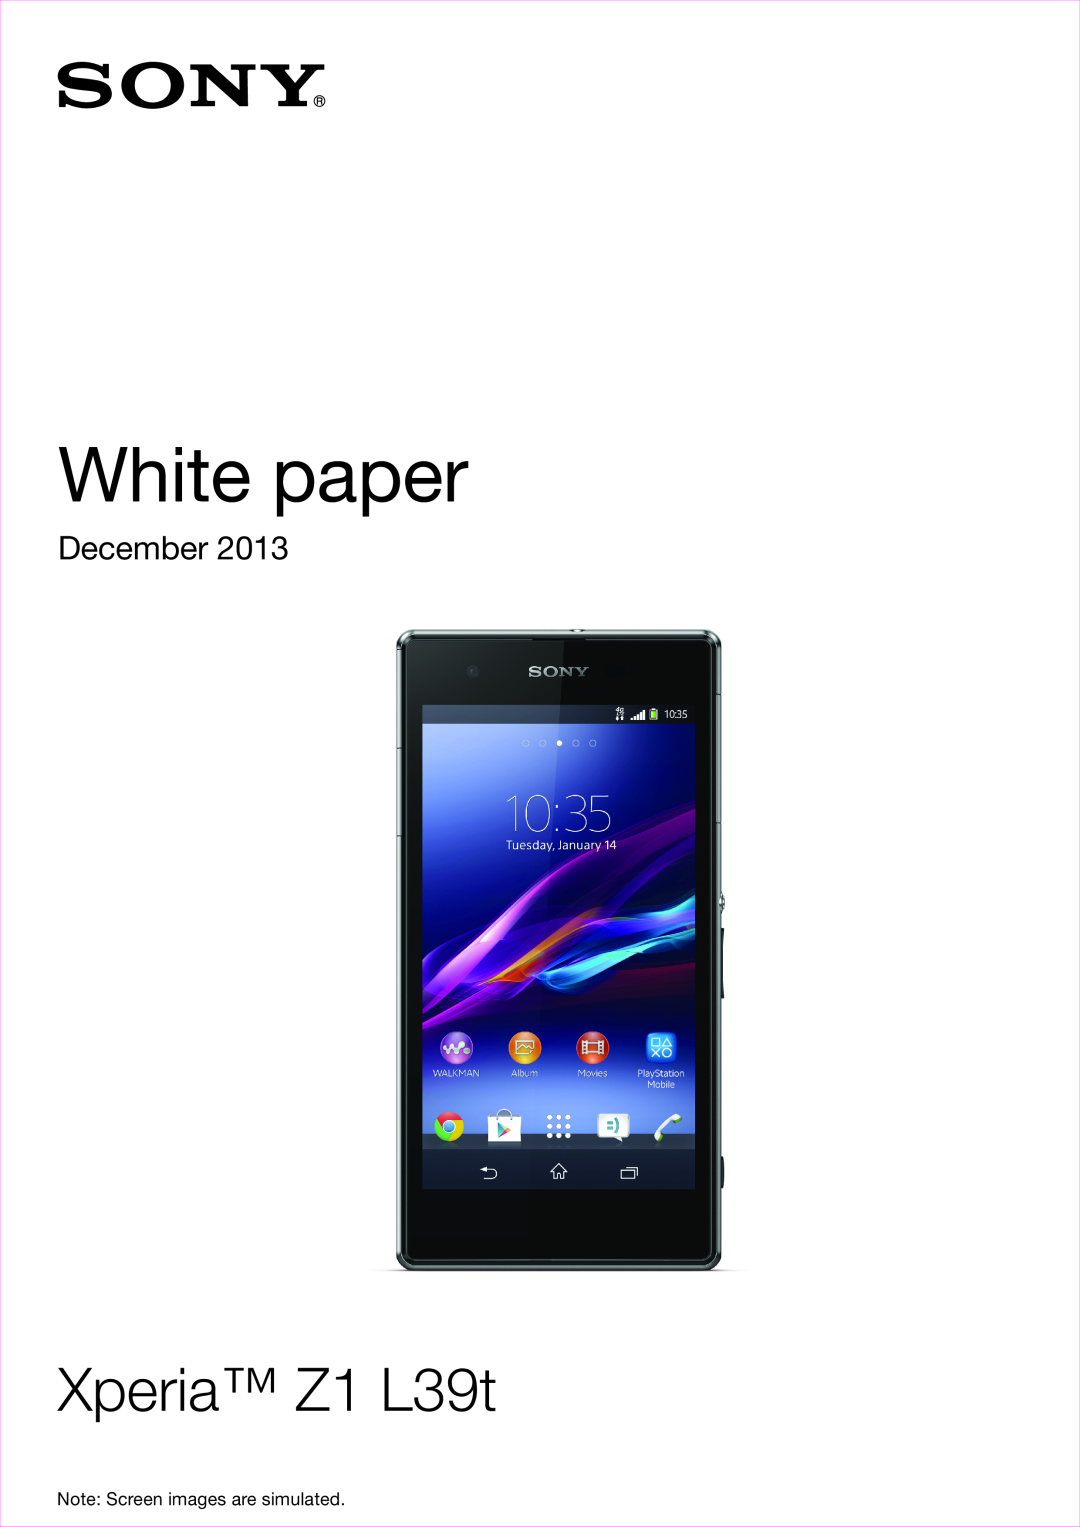 Sony manual White paper, Xperia Z1 L39t, December 